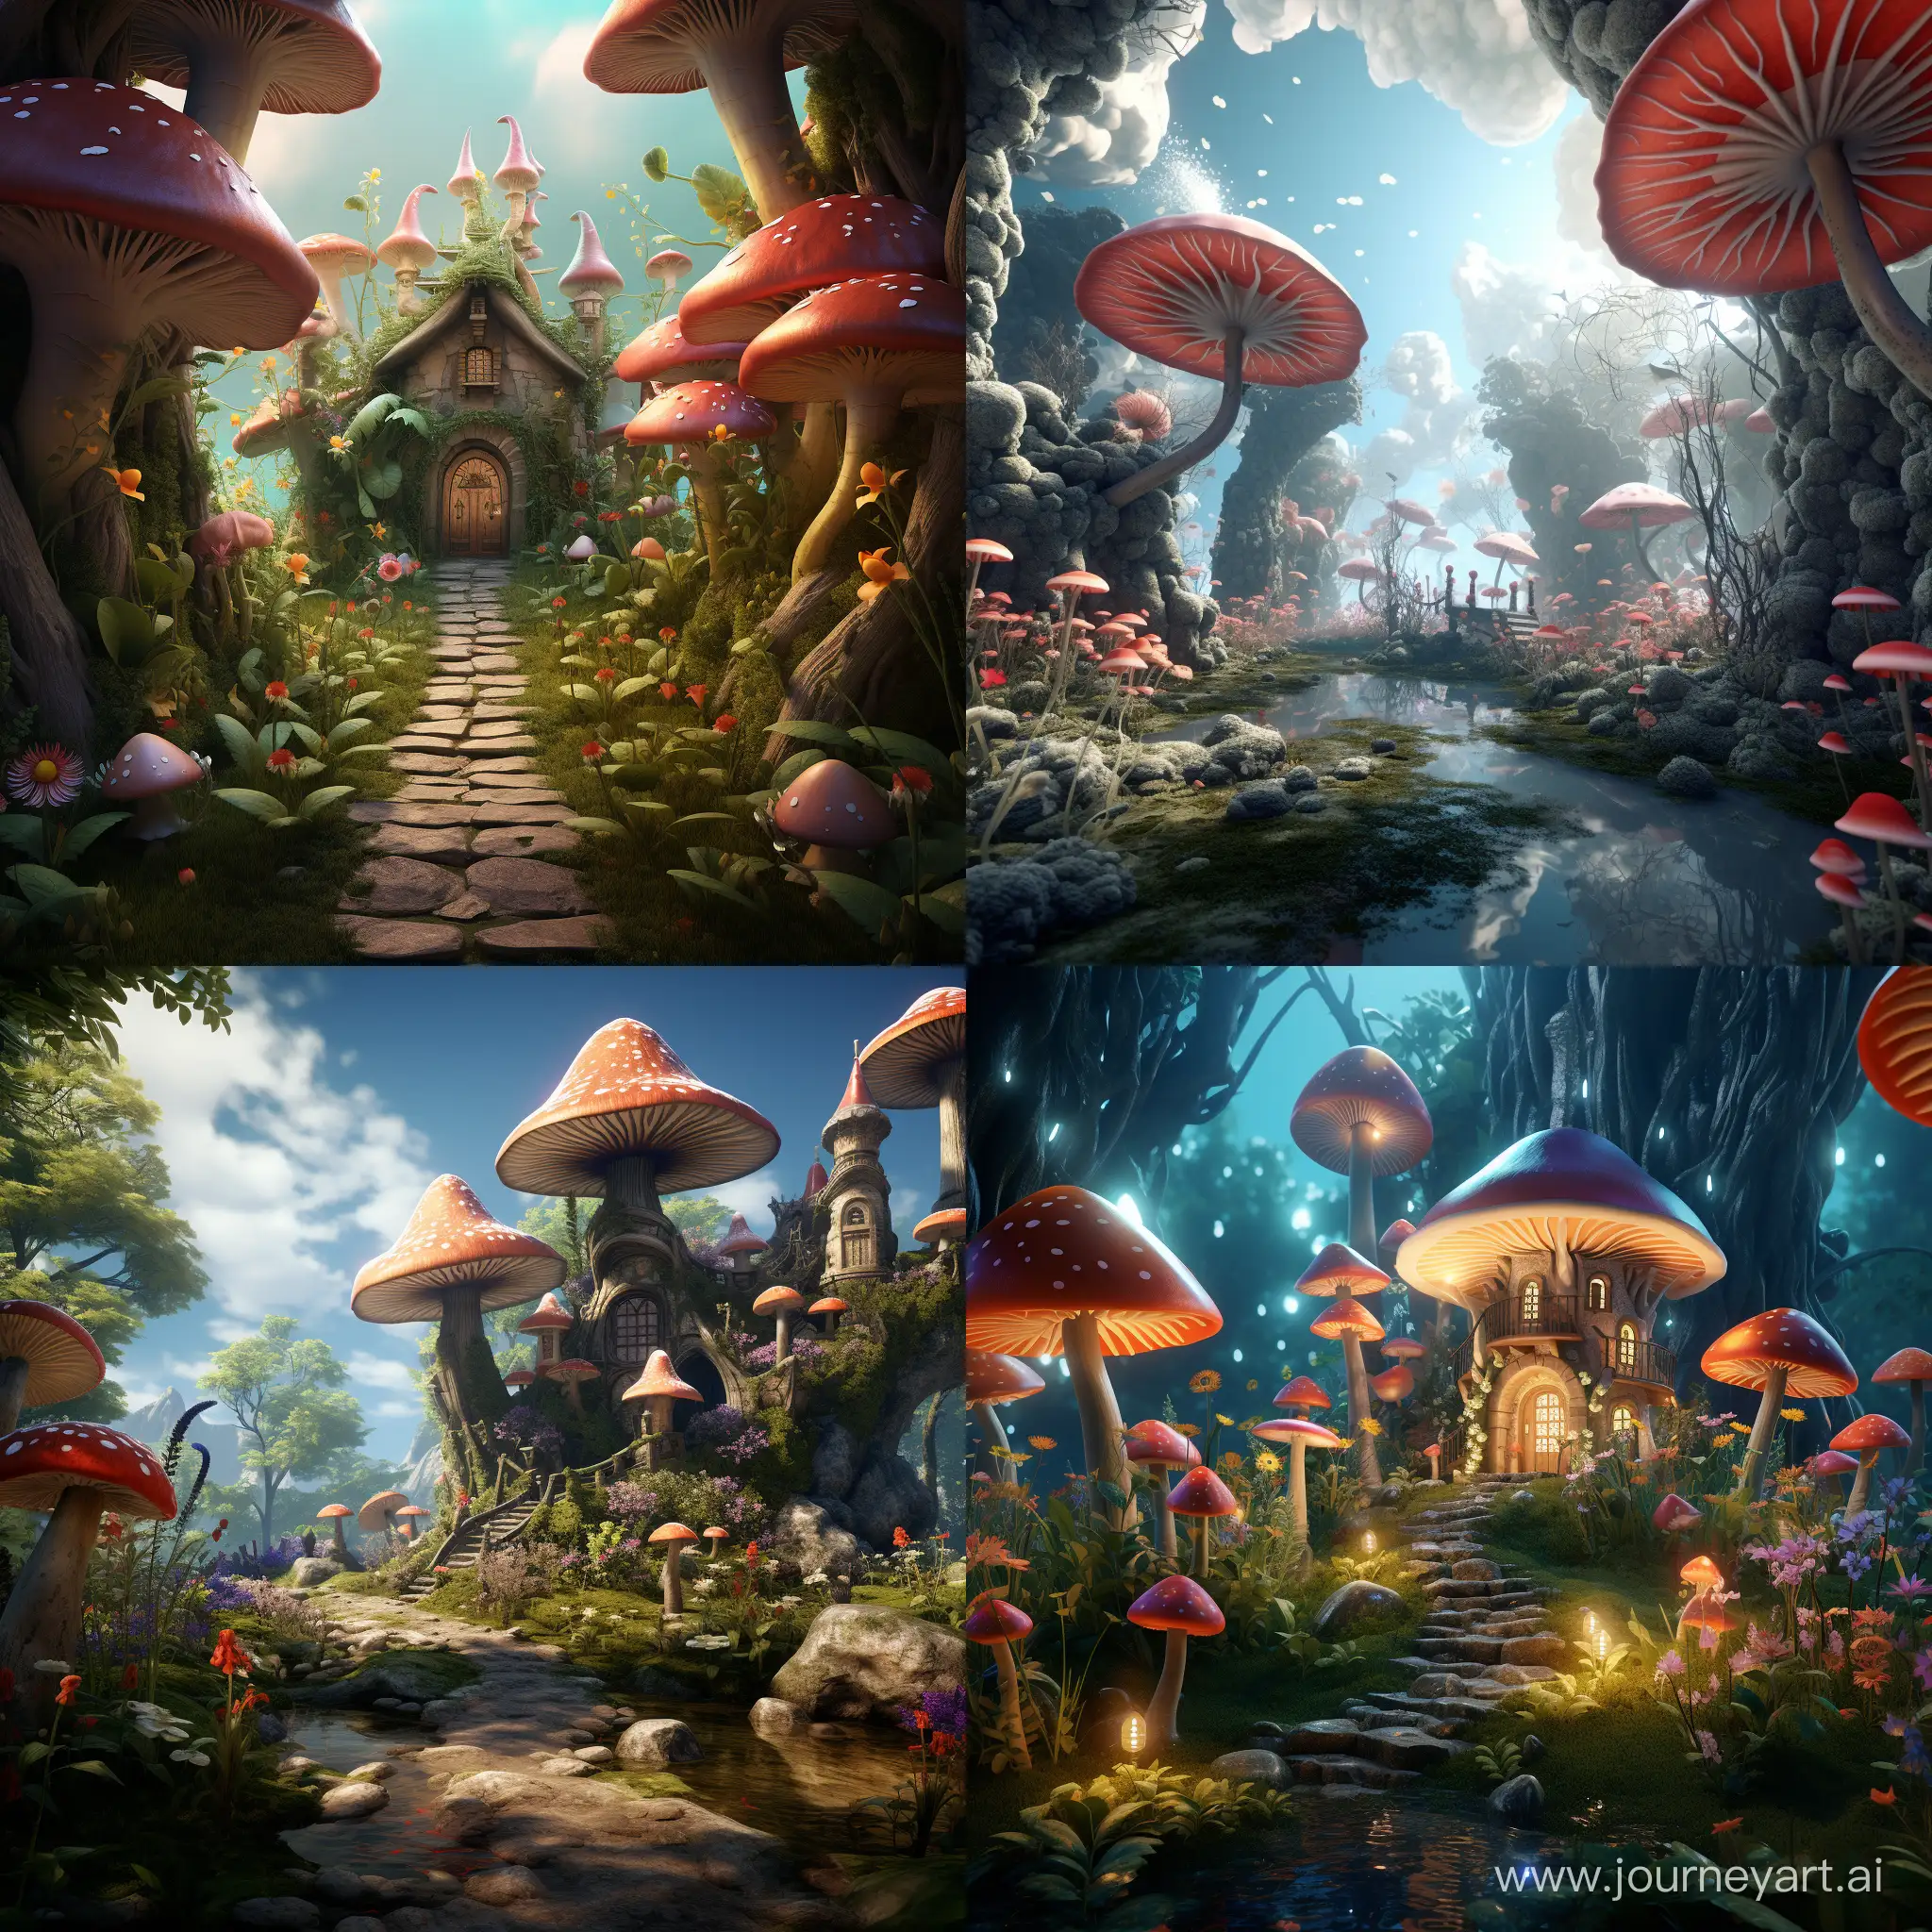 Enchanting-3D-Animation-of-a-Mystical-Magic-Garden